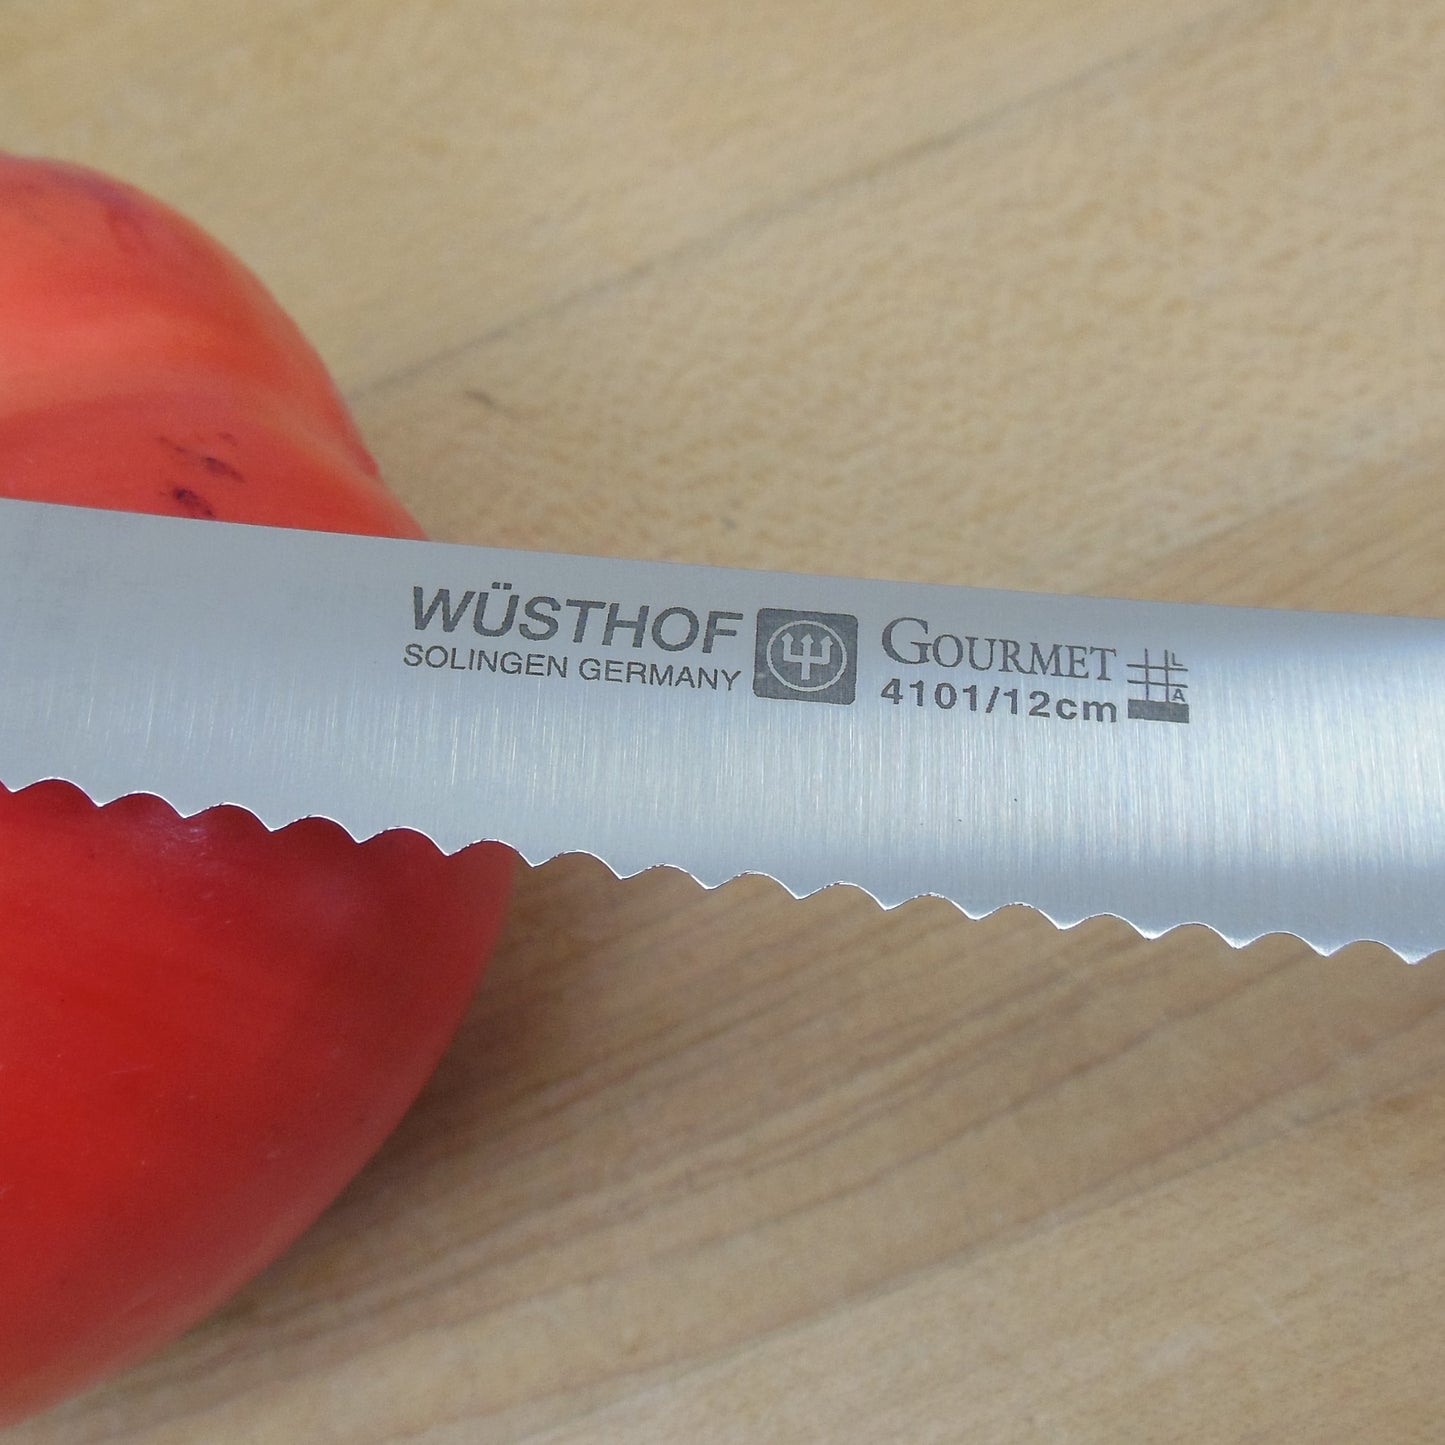 Wusthof Gourmet Solingen Germany Stainless 4101/12cm Serrated Utility Vegetable Knife